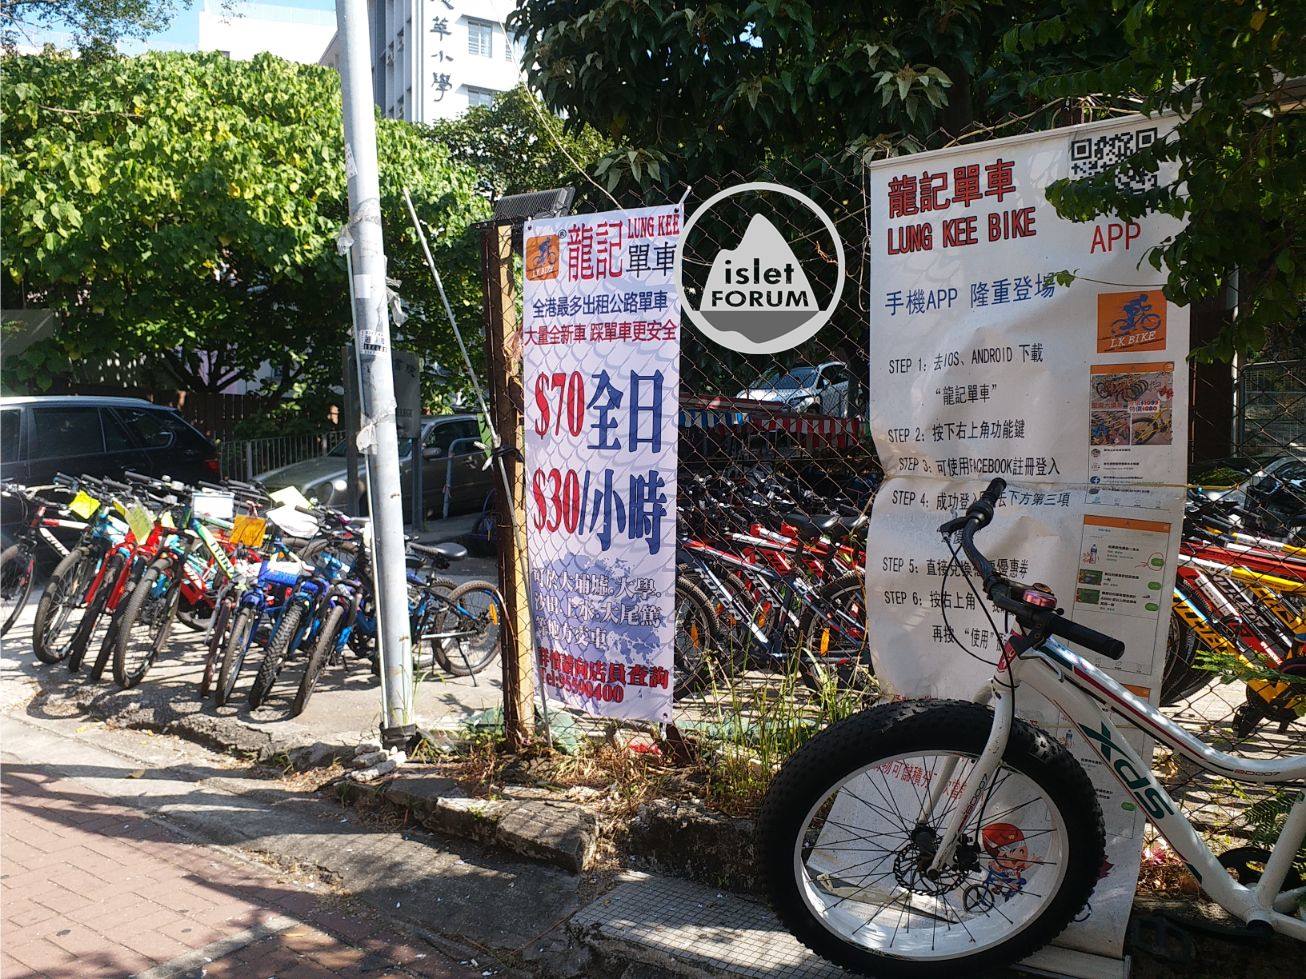 龍記單車 Lung Kee Bike (LK Bike) (1).jpg